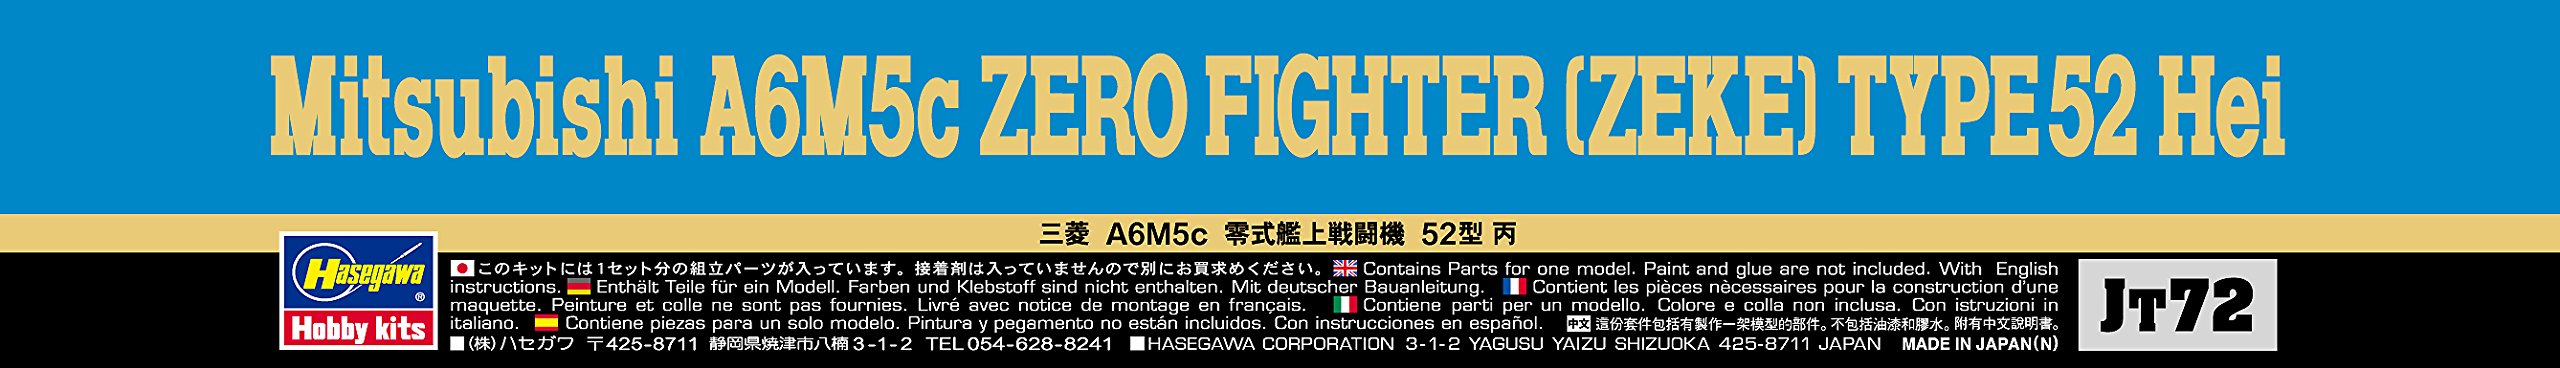 HASEGAWA 1/48 Mitsubishi A6M5C Zero Fighter Zeke Typ 52 Hei Plastikmodell